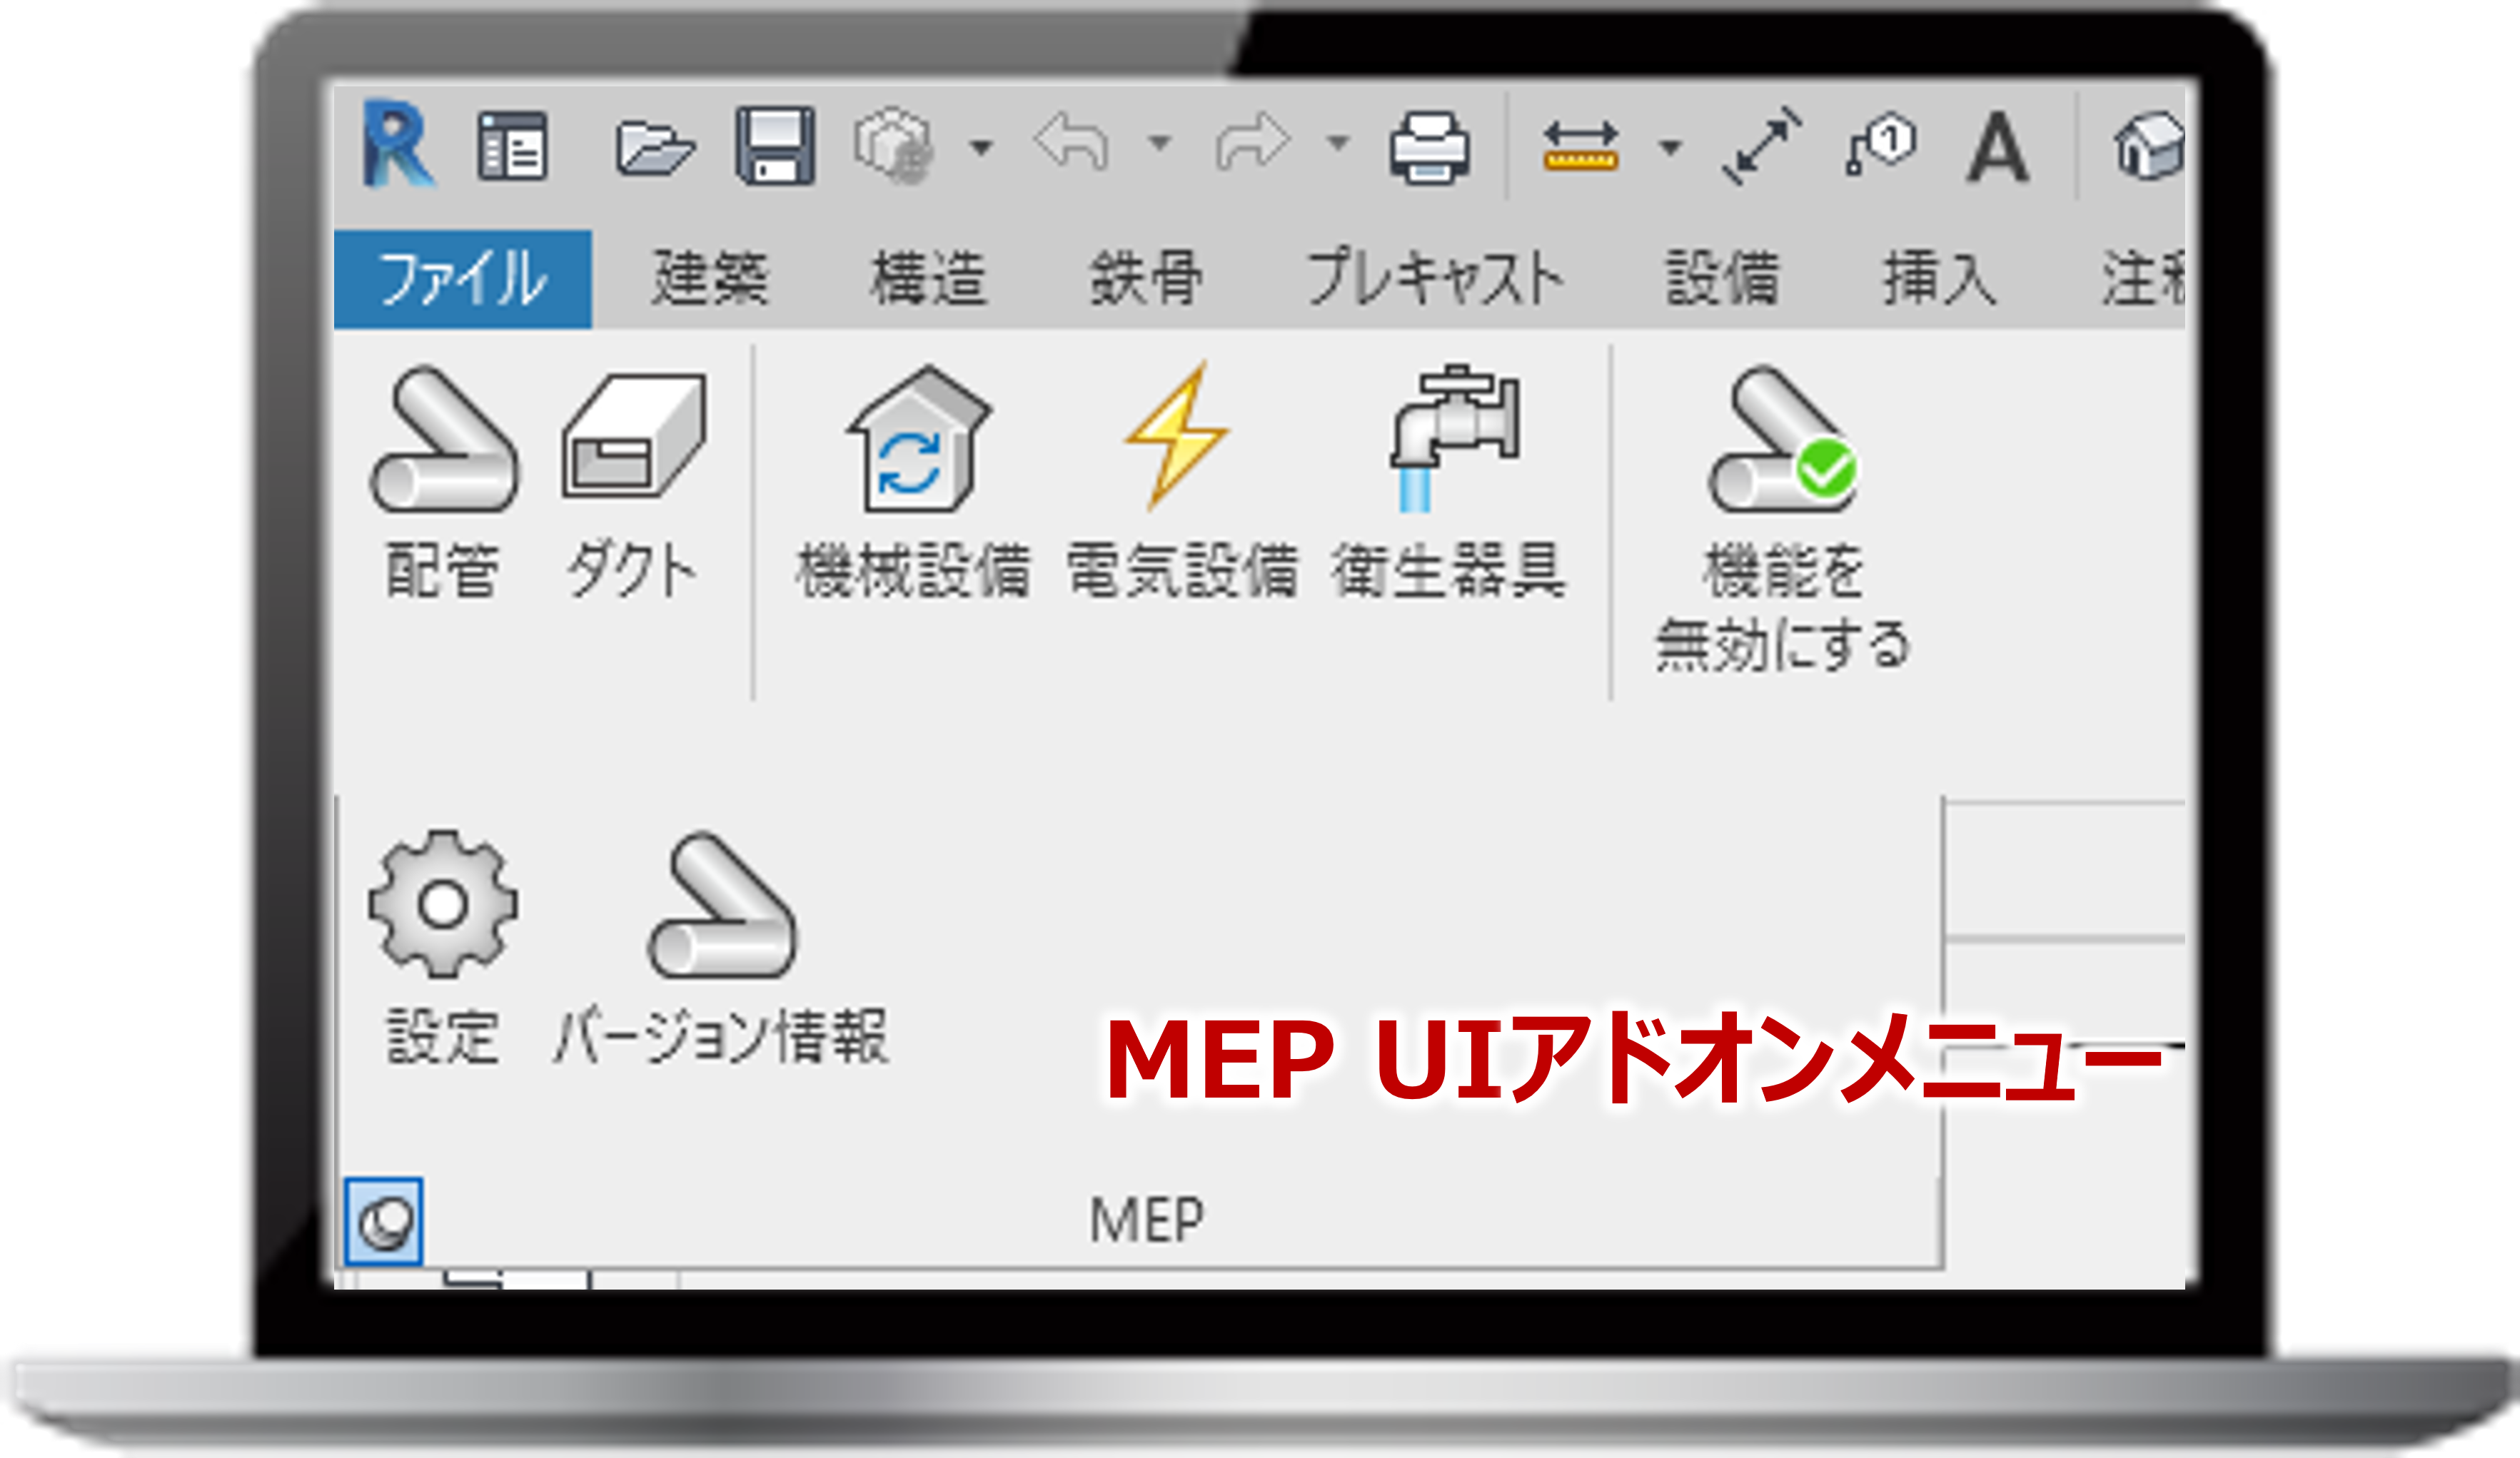 Revit MEP UI メニュー画面